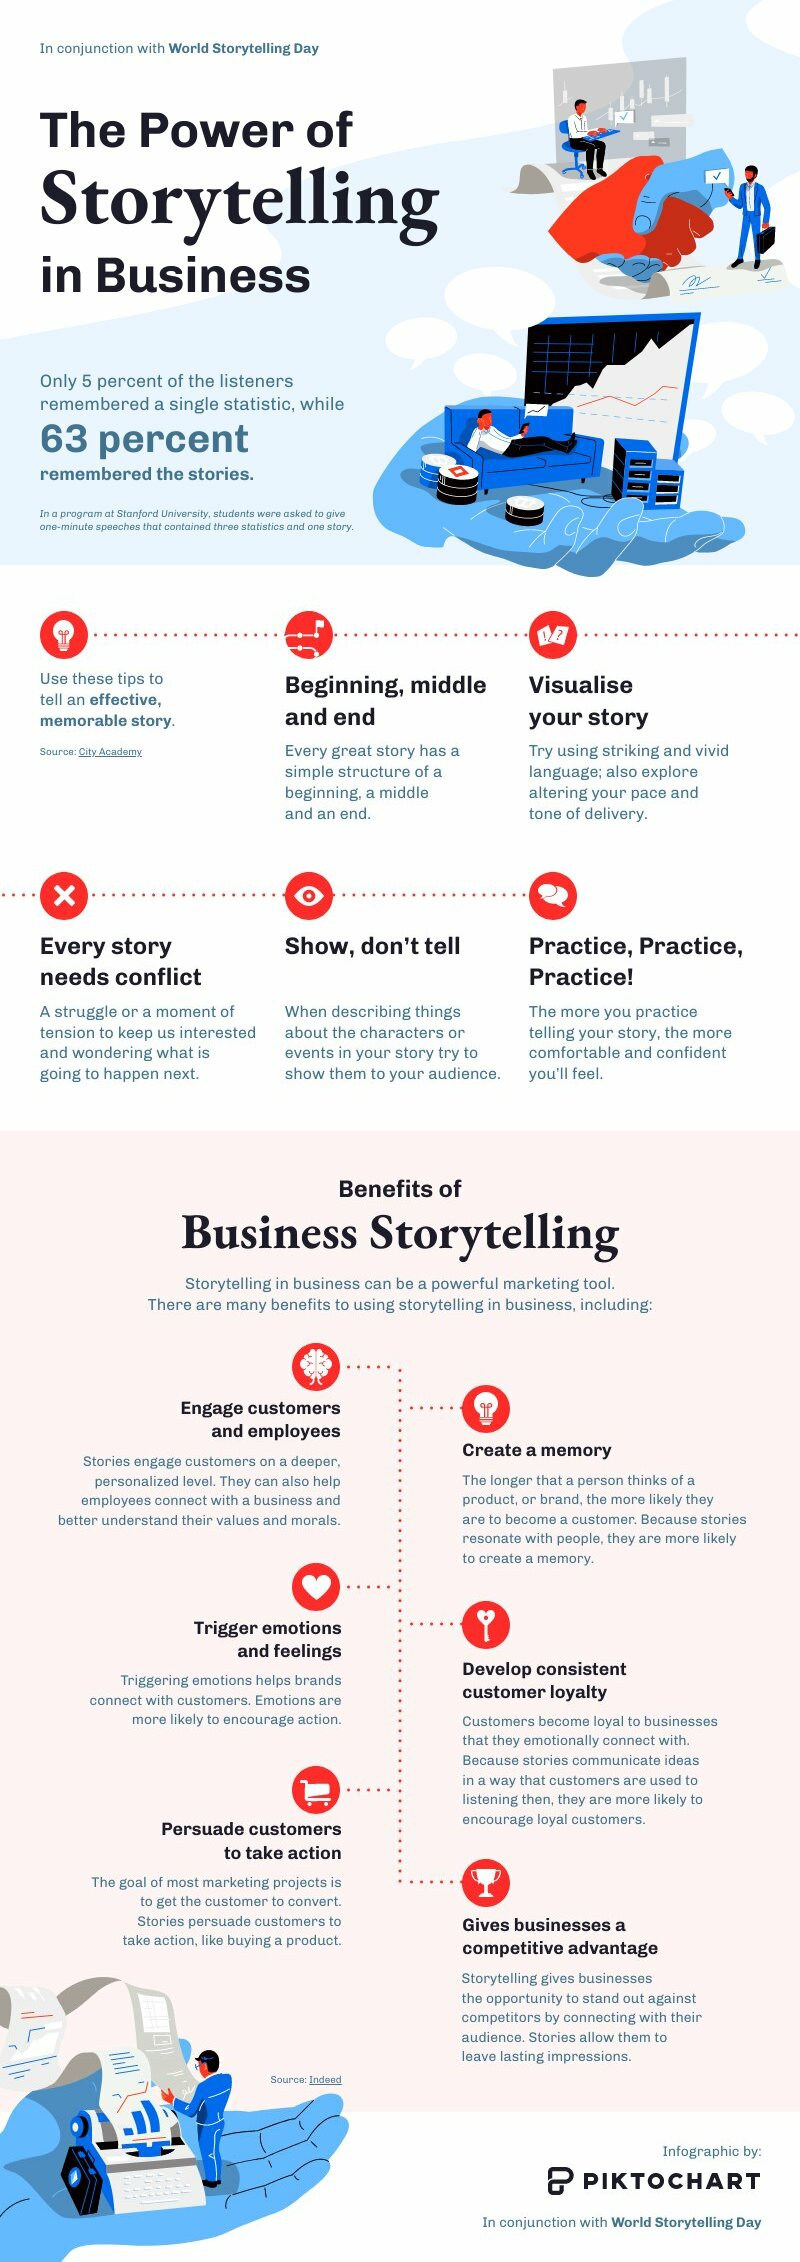 Business Storytelling Tips